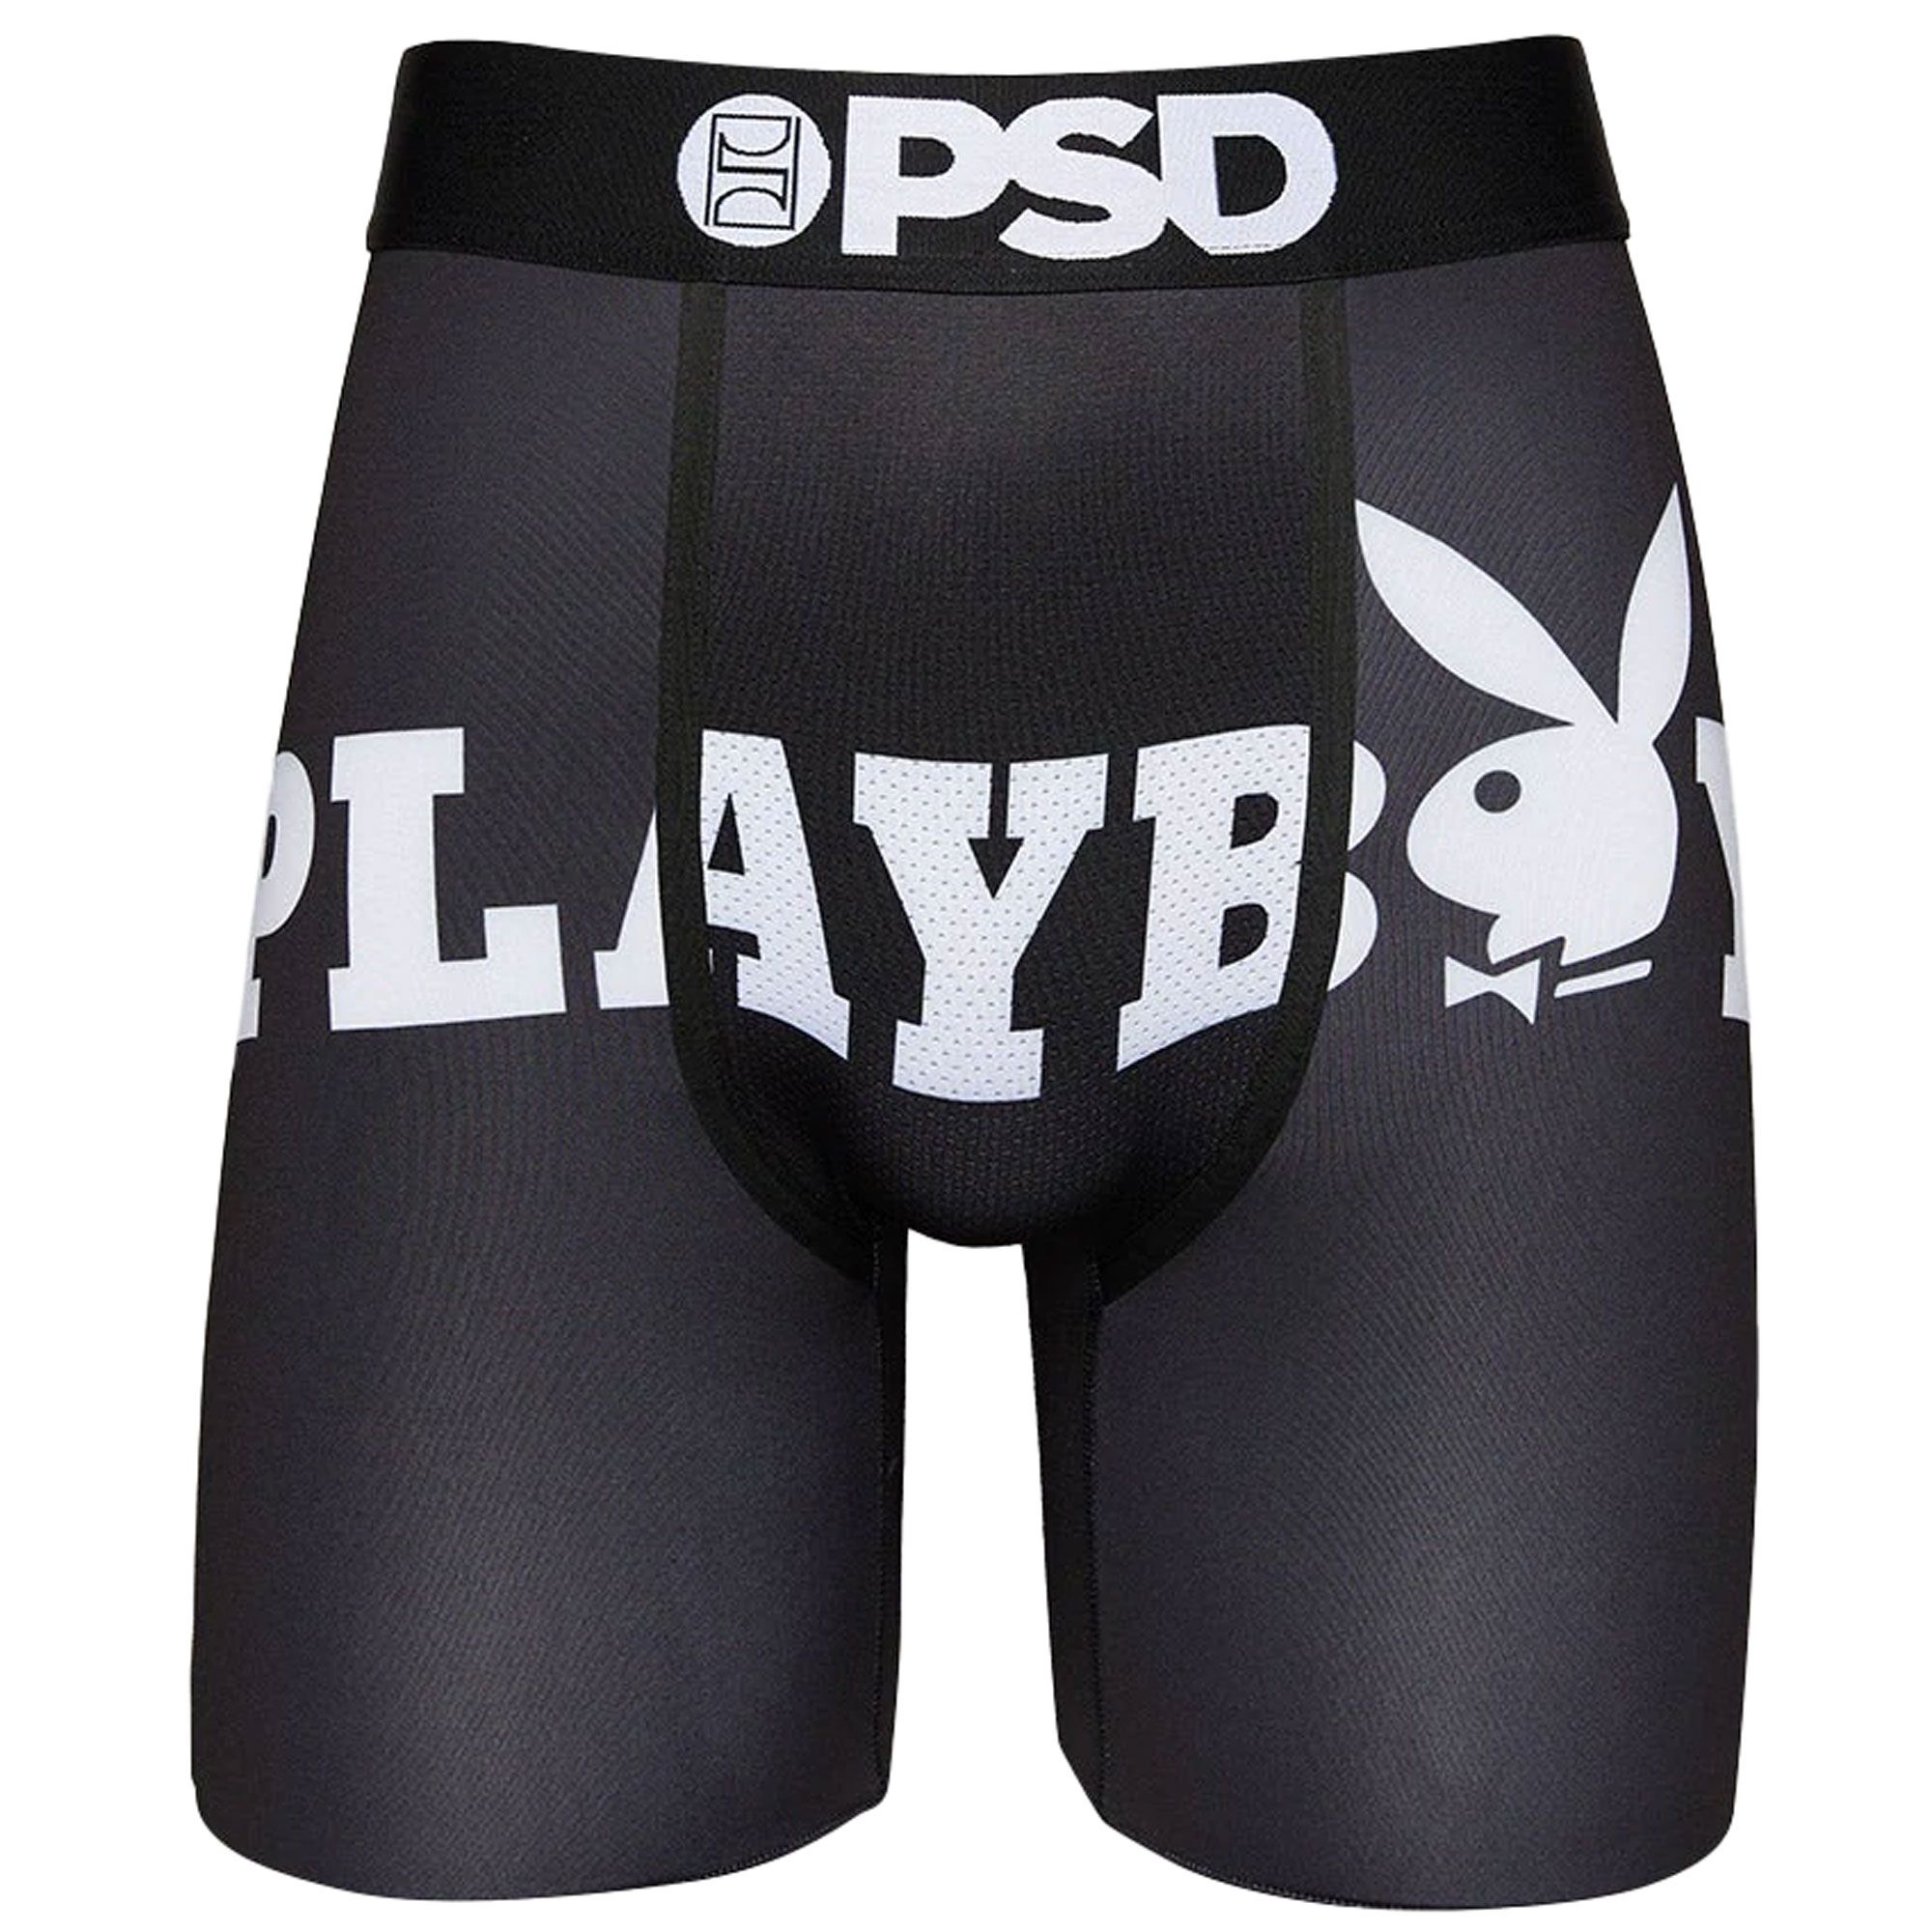 Playboy logo